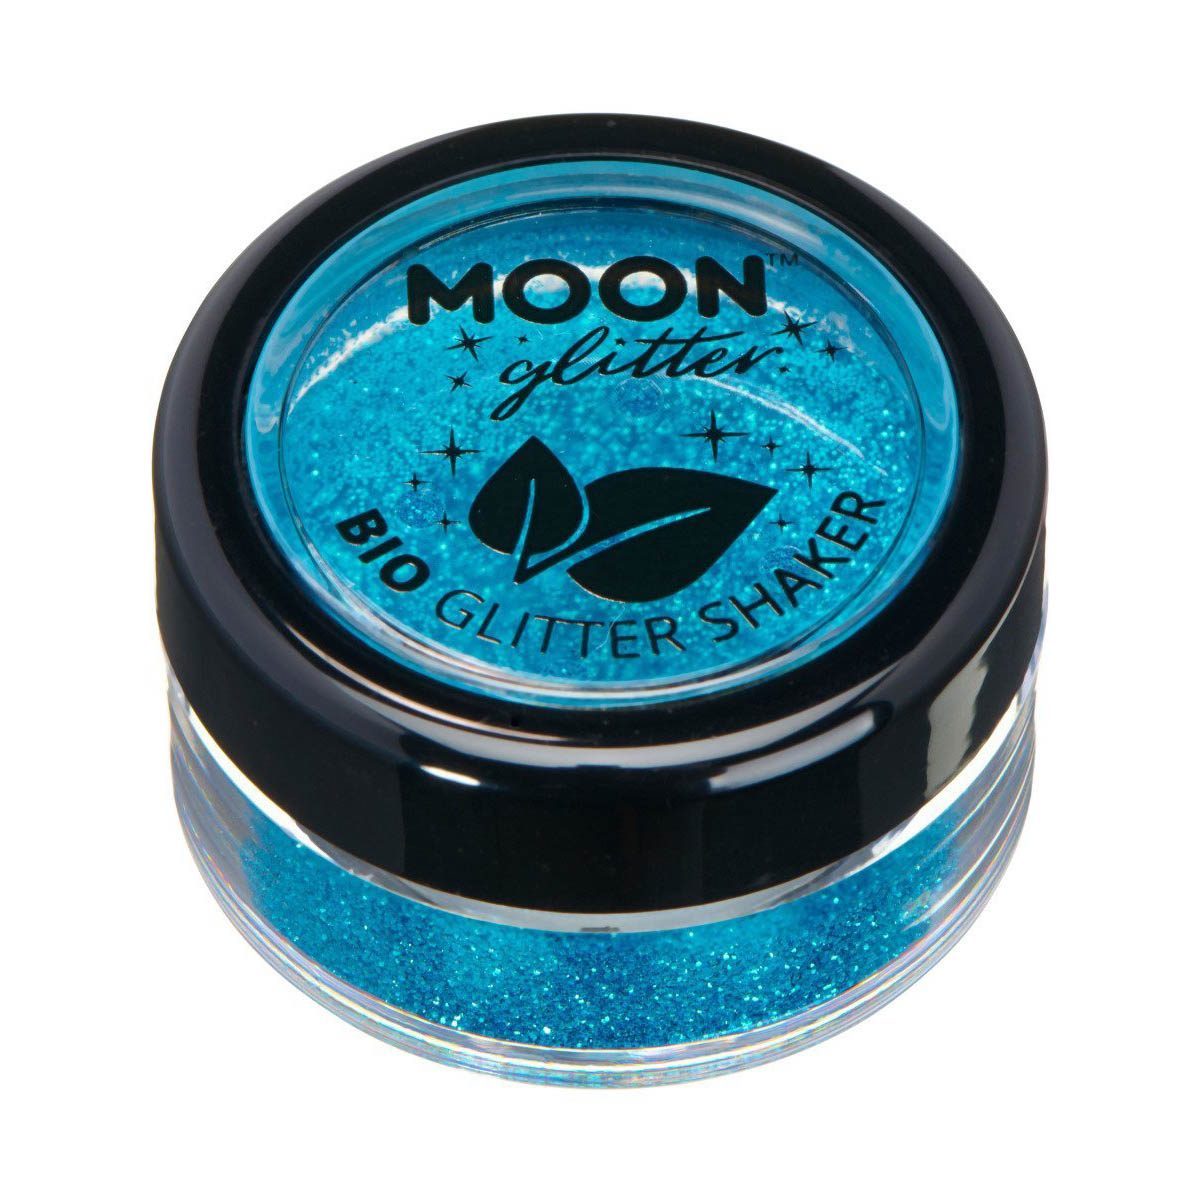 Moon glitter bio finkornigt shakers 5g Blå